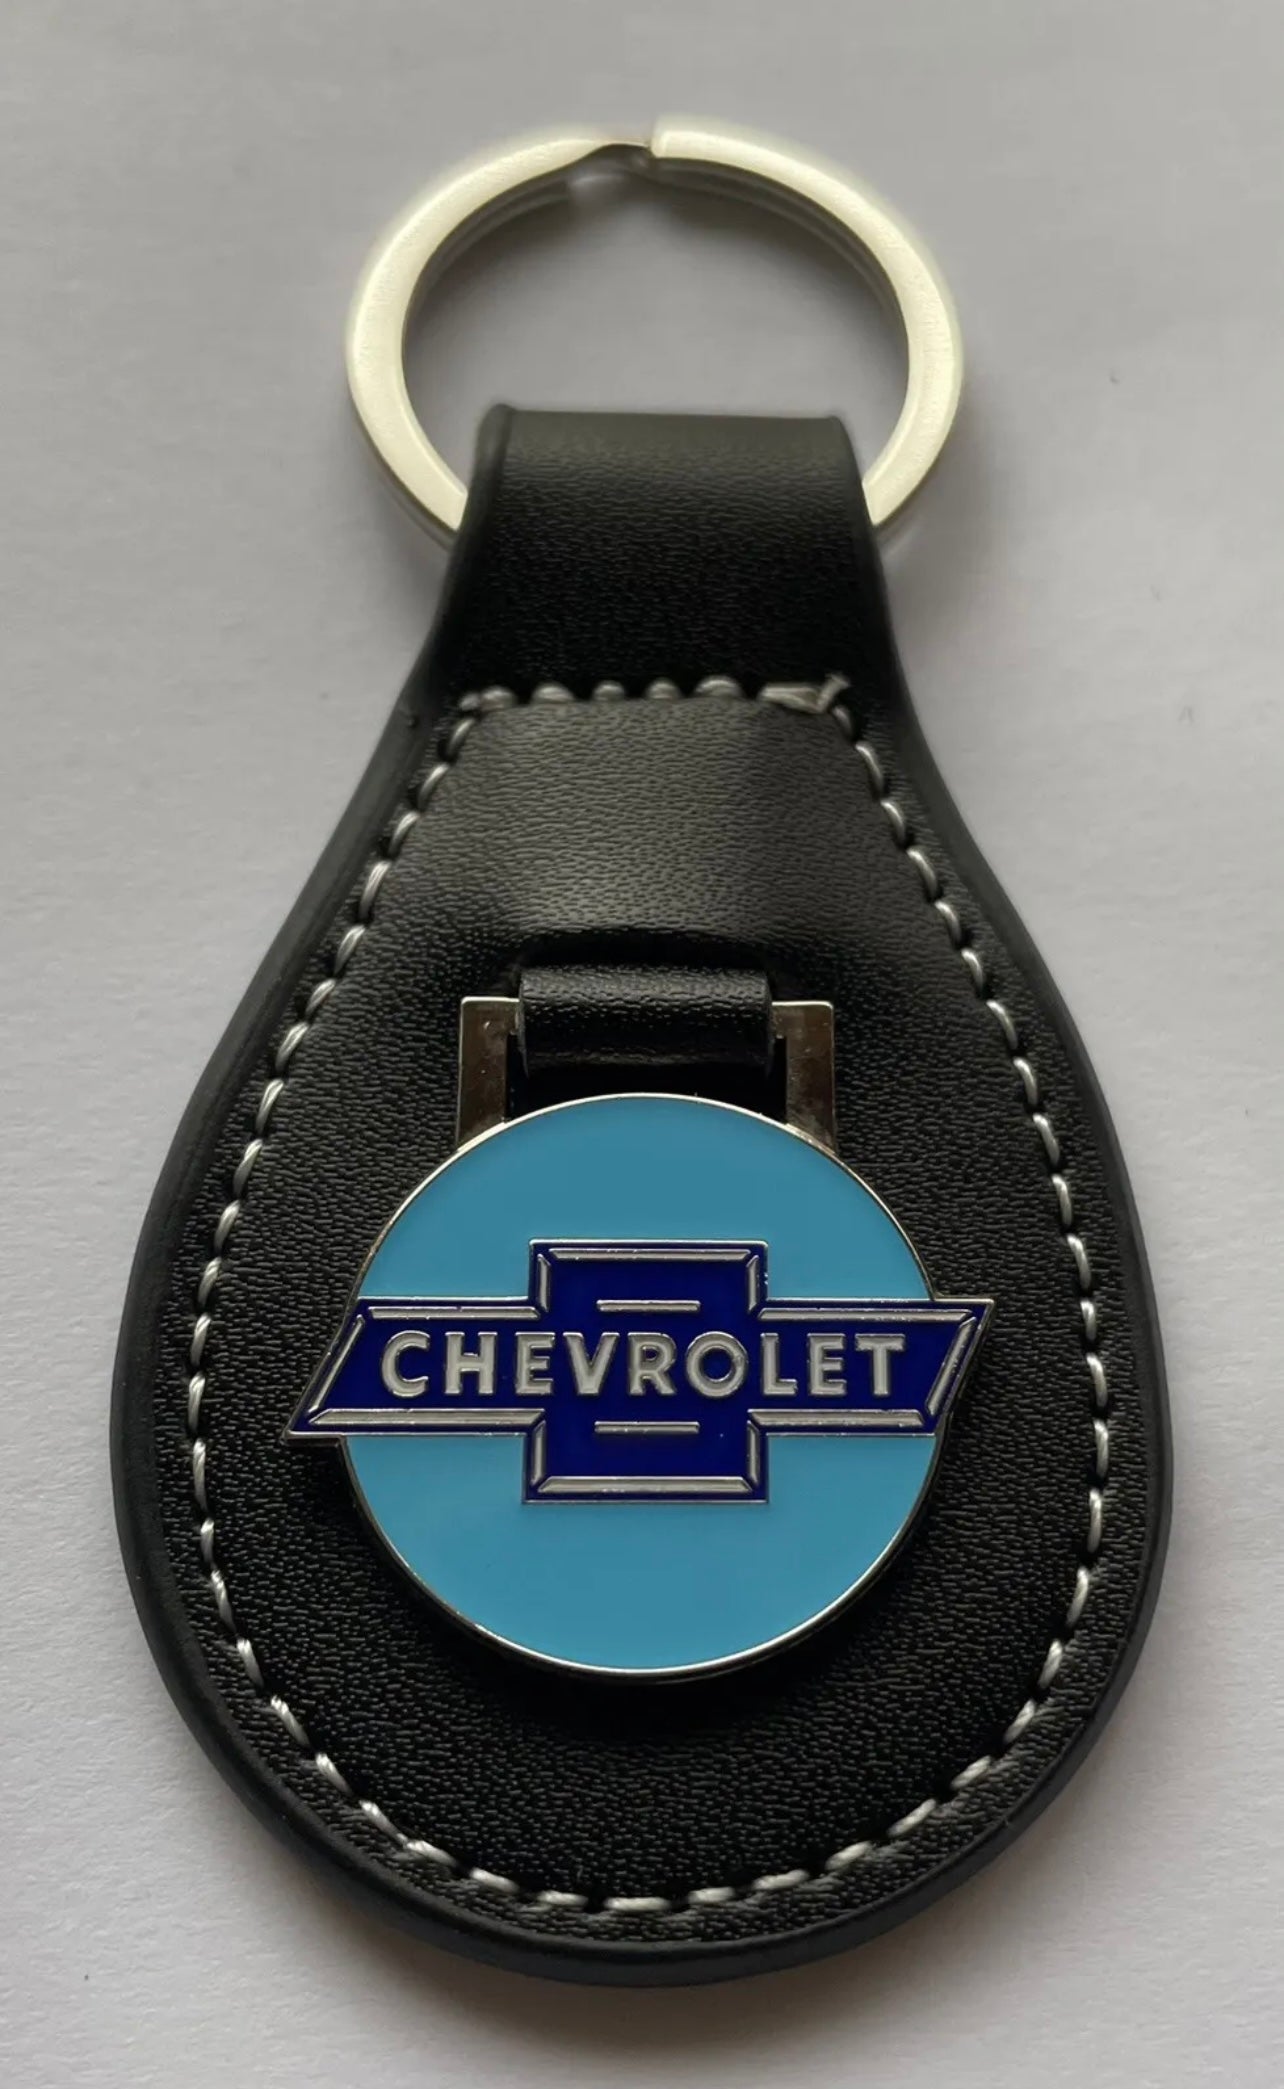 Chevrolet Leather Key Ring